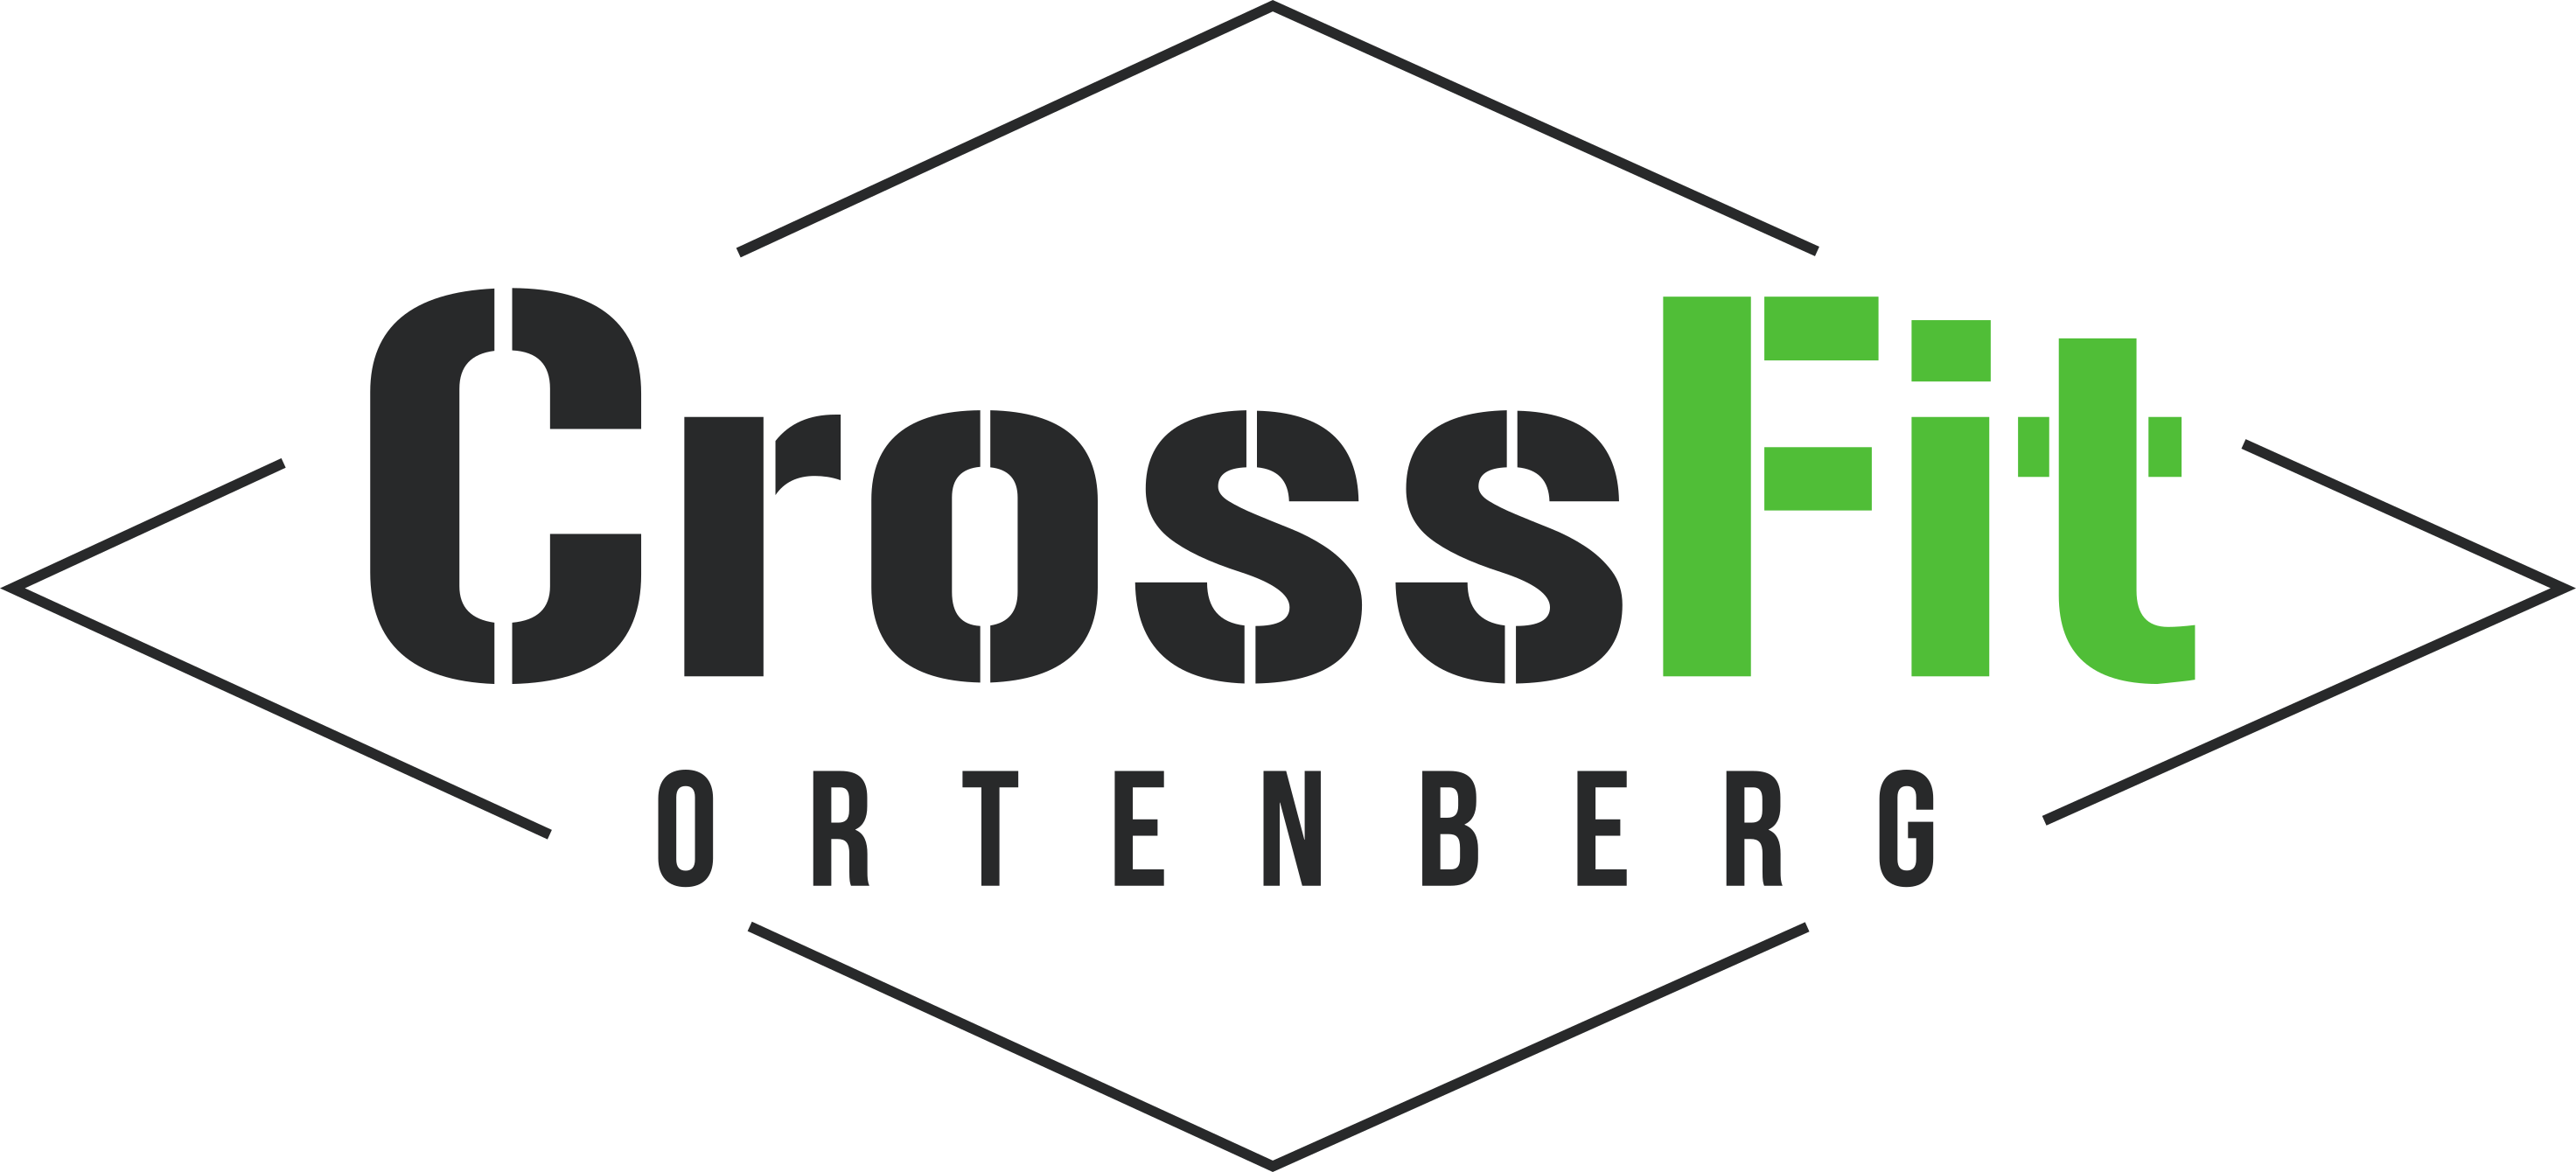 CrossFit Ortenberg